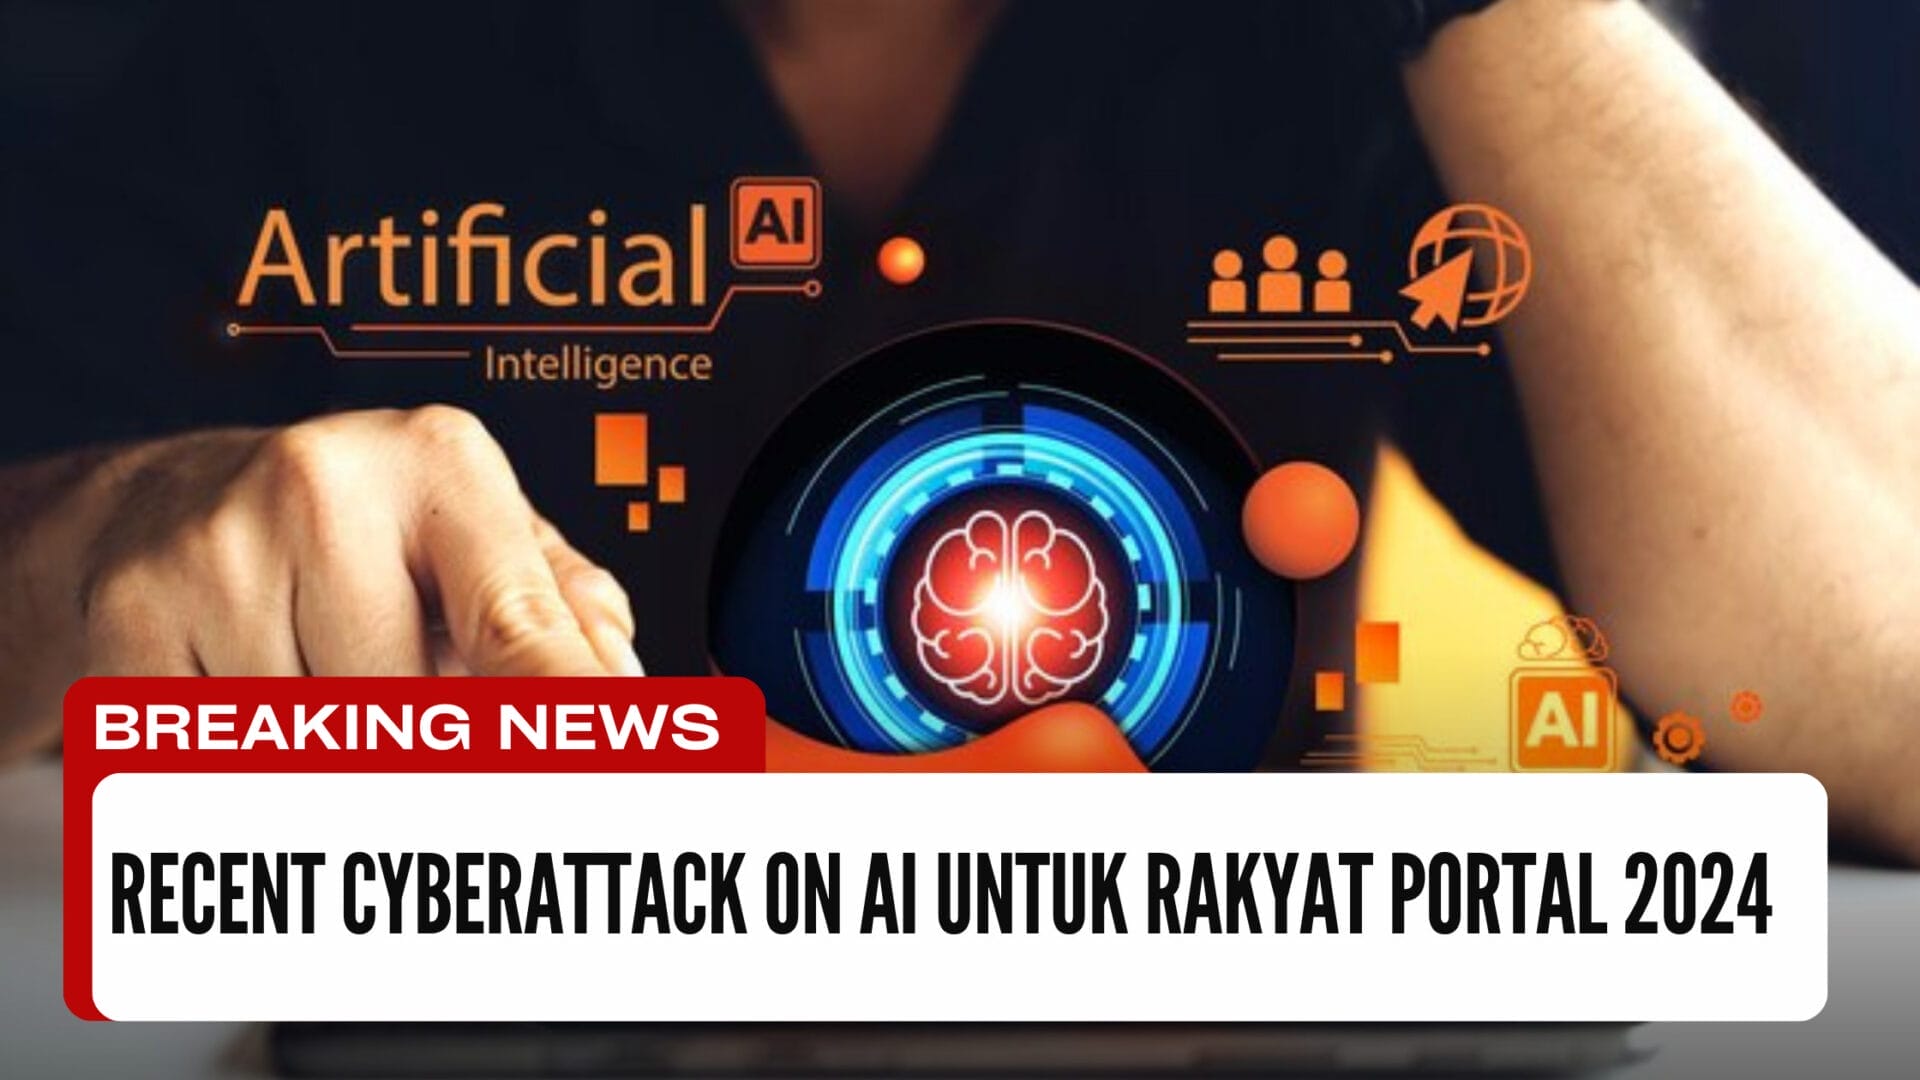 Cyberattack on AI Untuk Rakyat Portal 2024